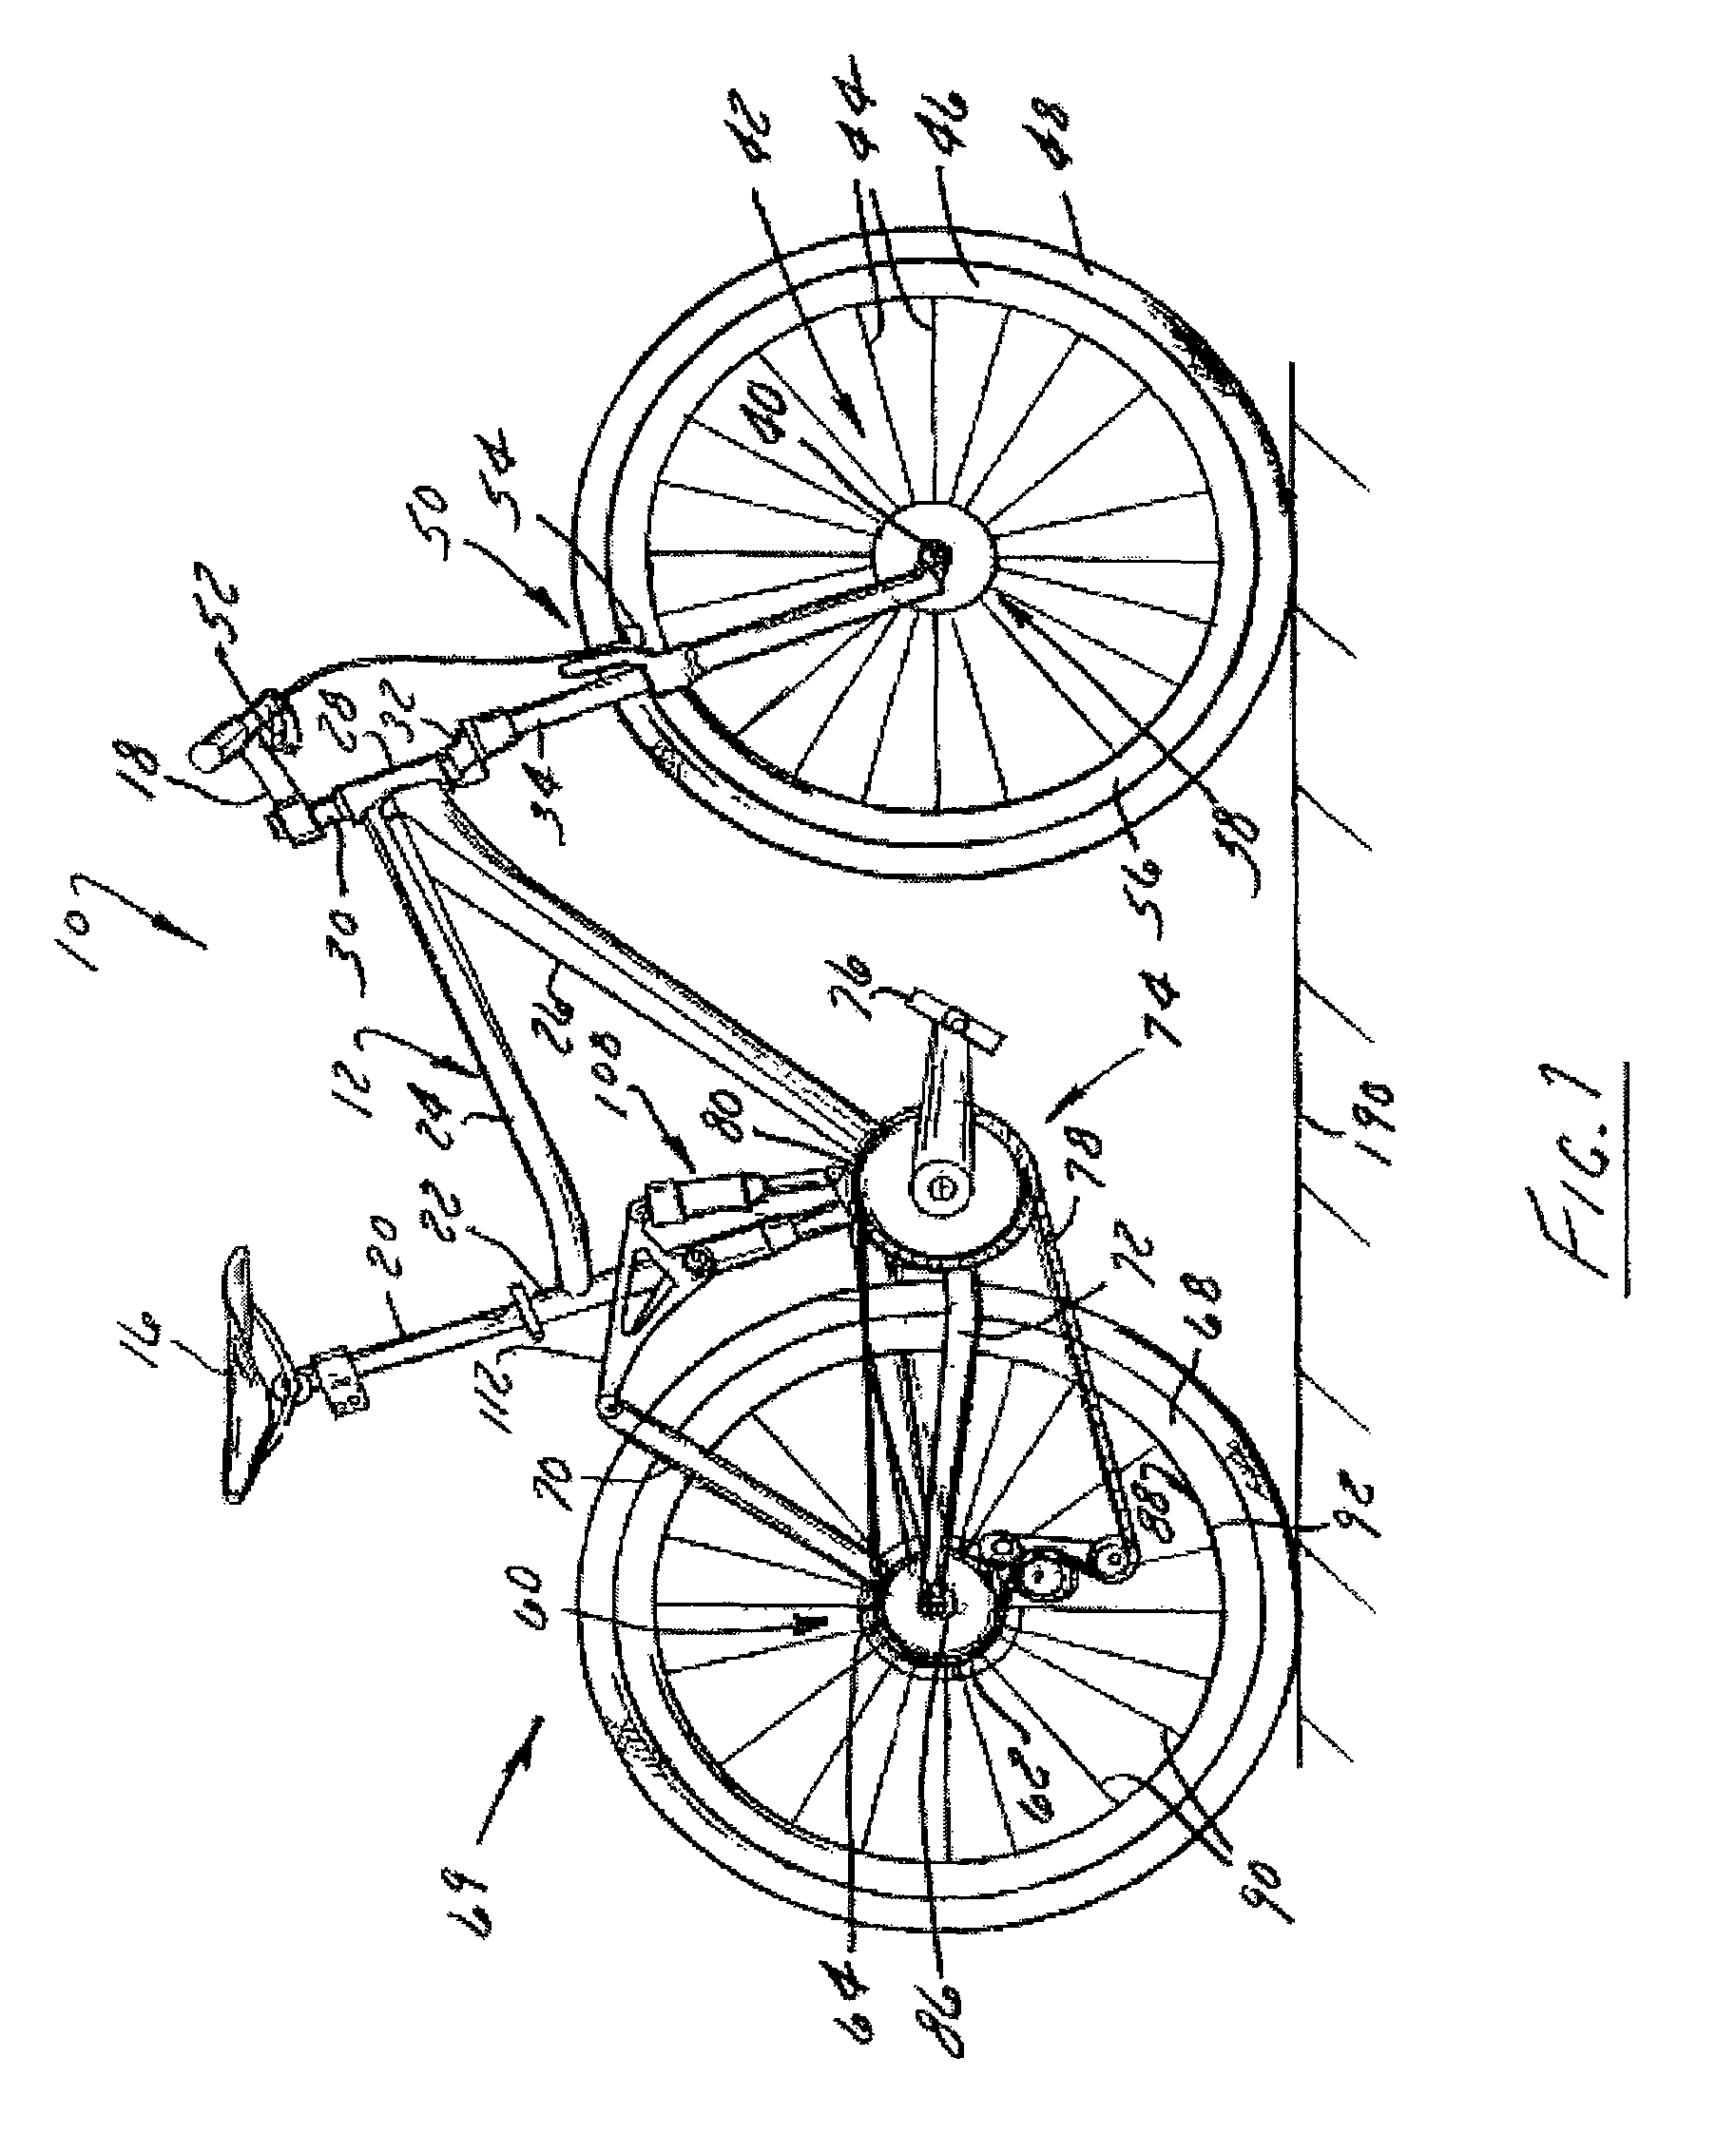 Bicycle rear wheel suspension system